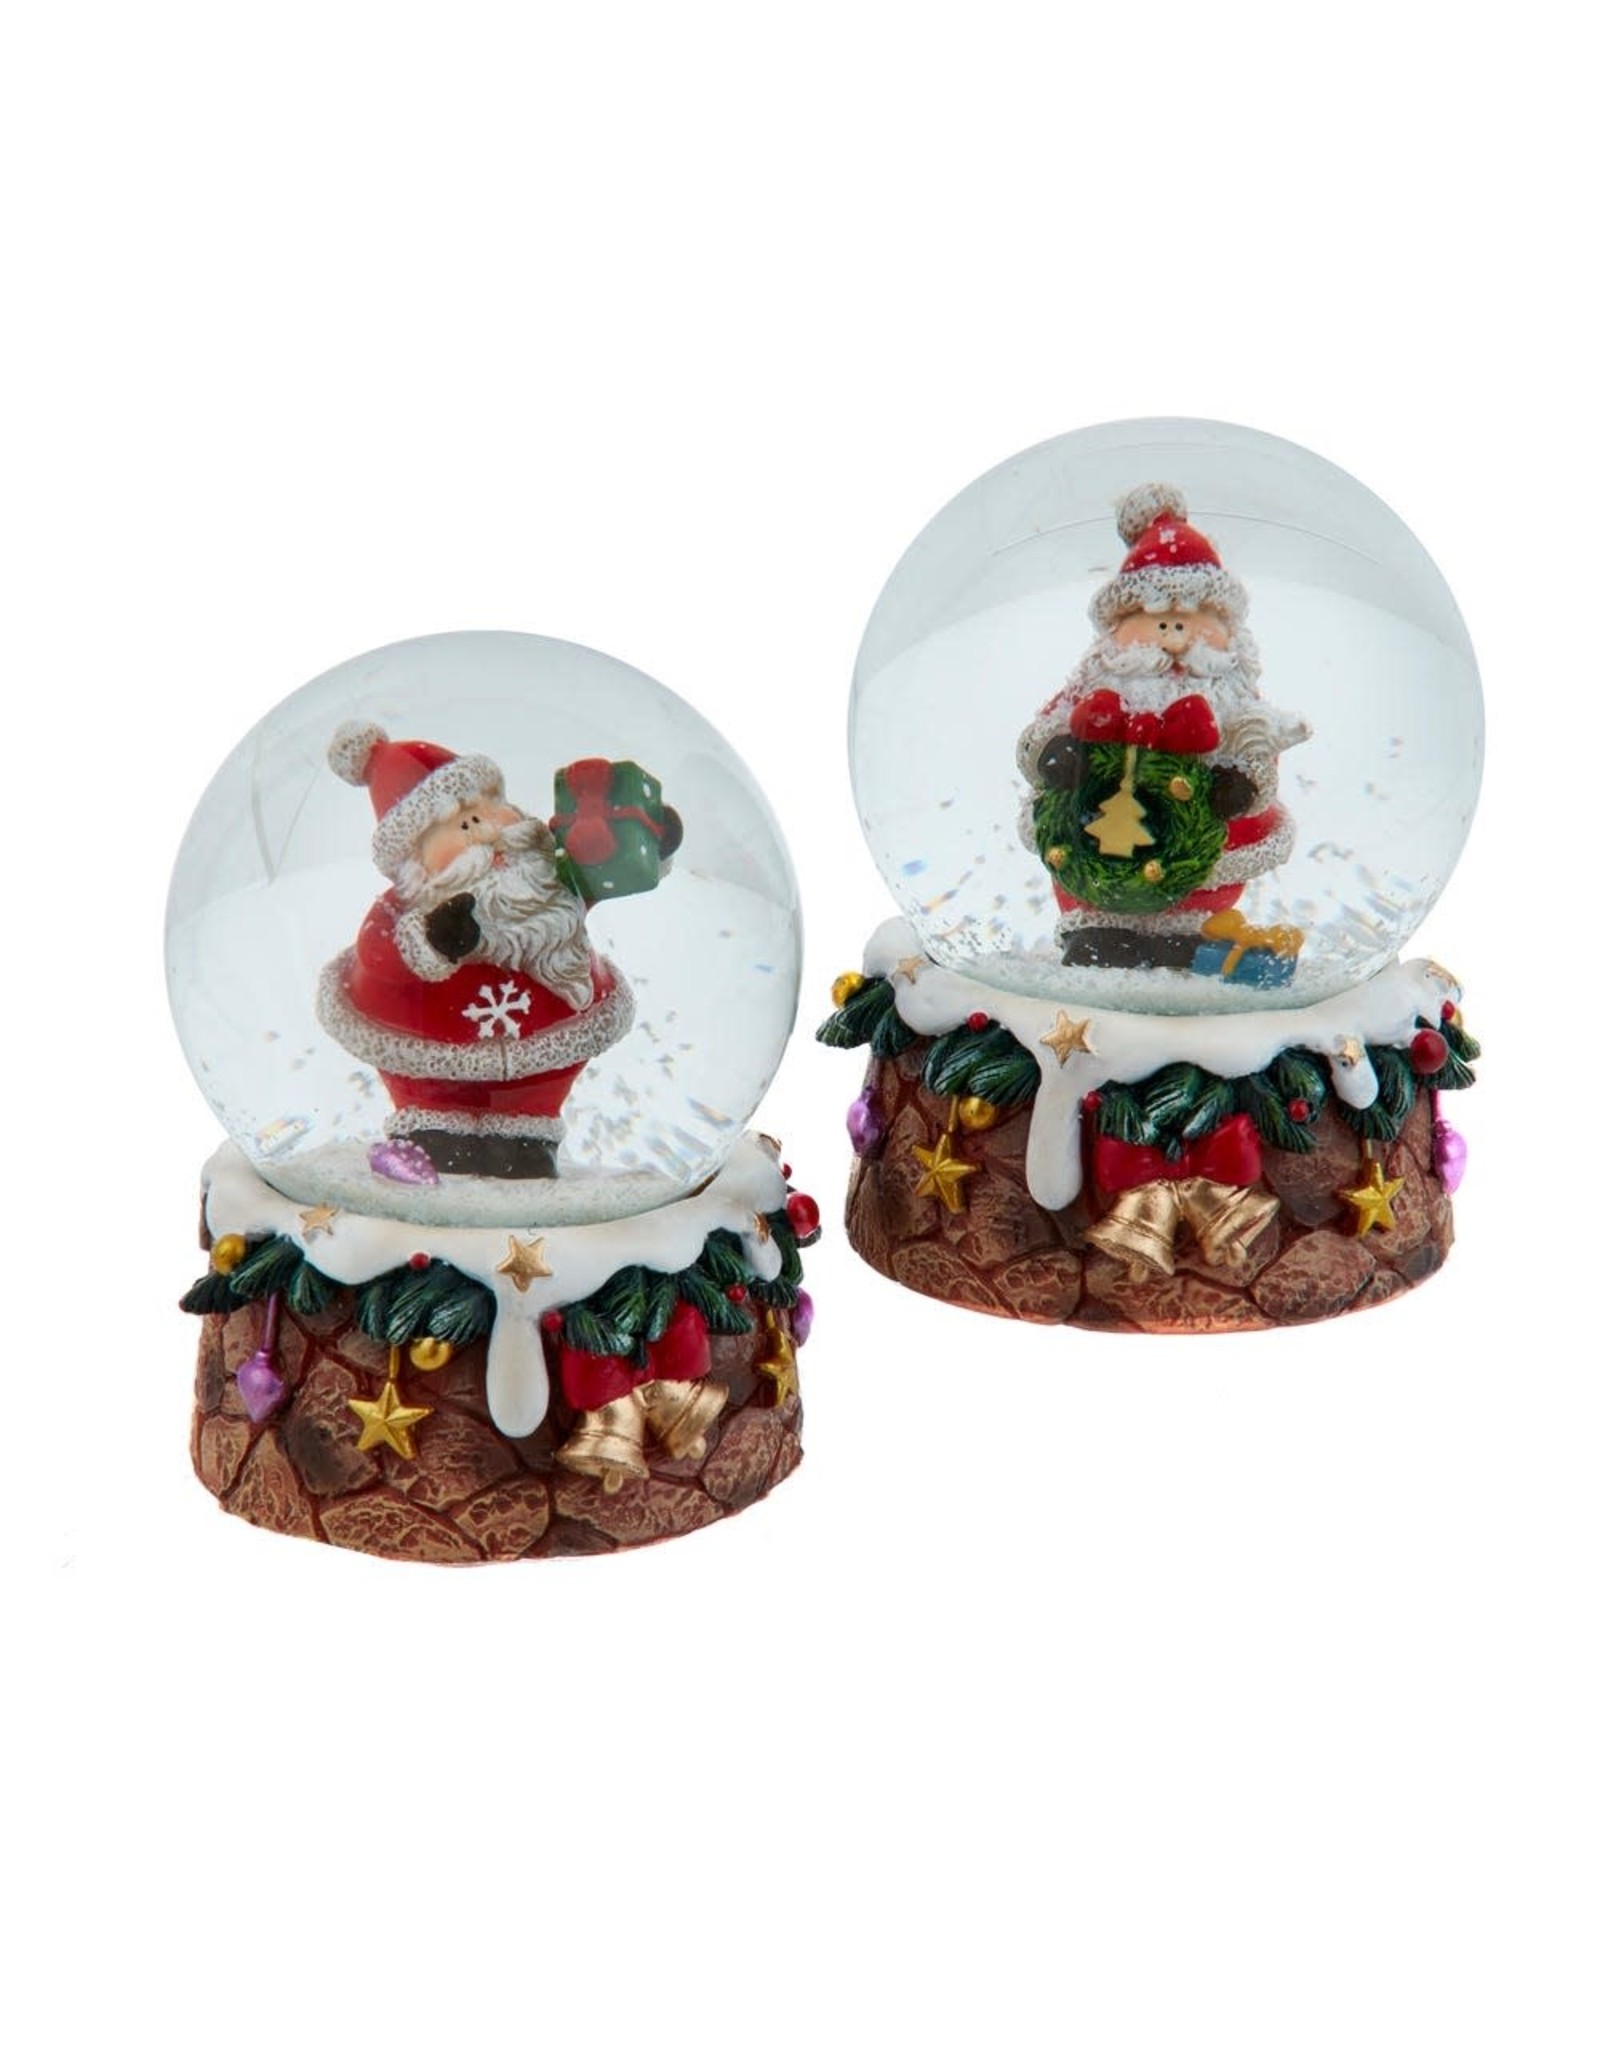 Kurt Adler Christmas Snow Globes 65mm 2 Assorted Santa Water Globes